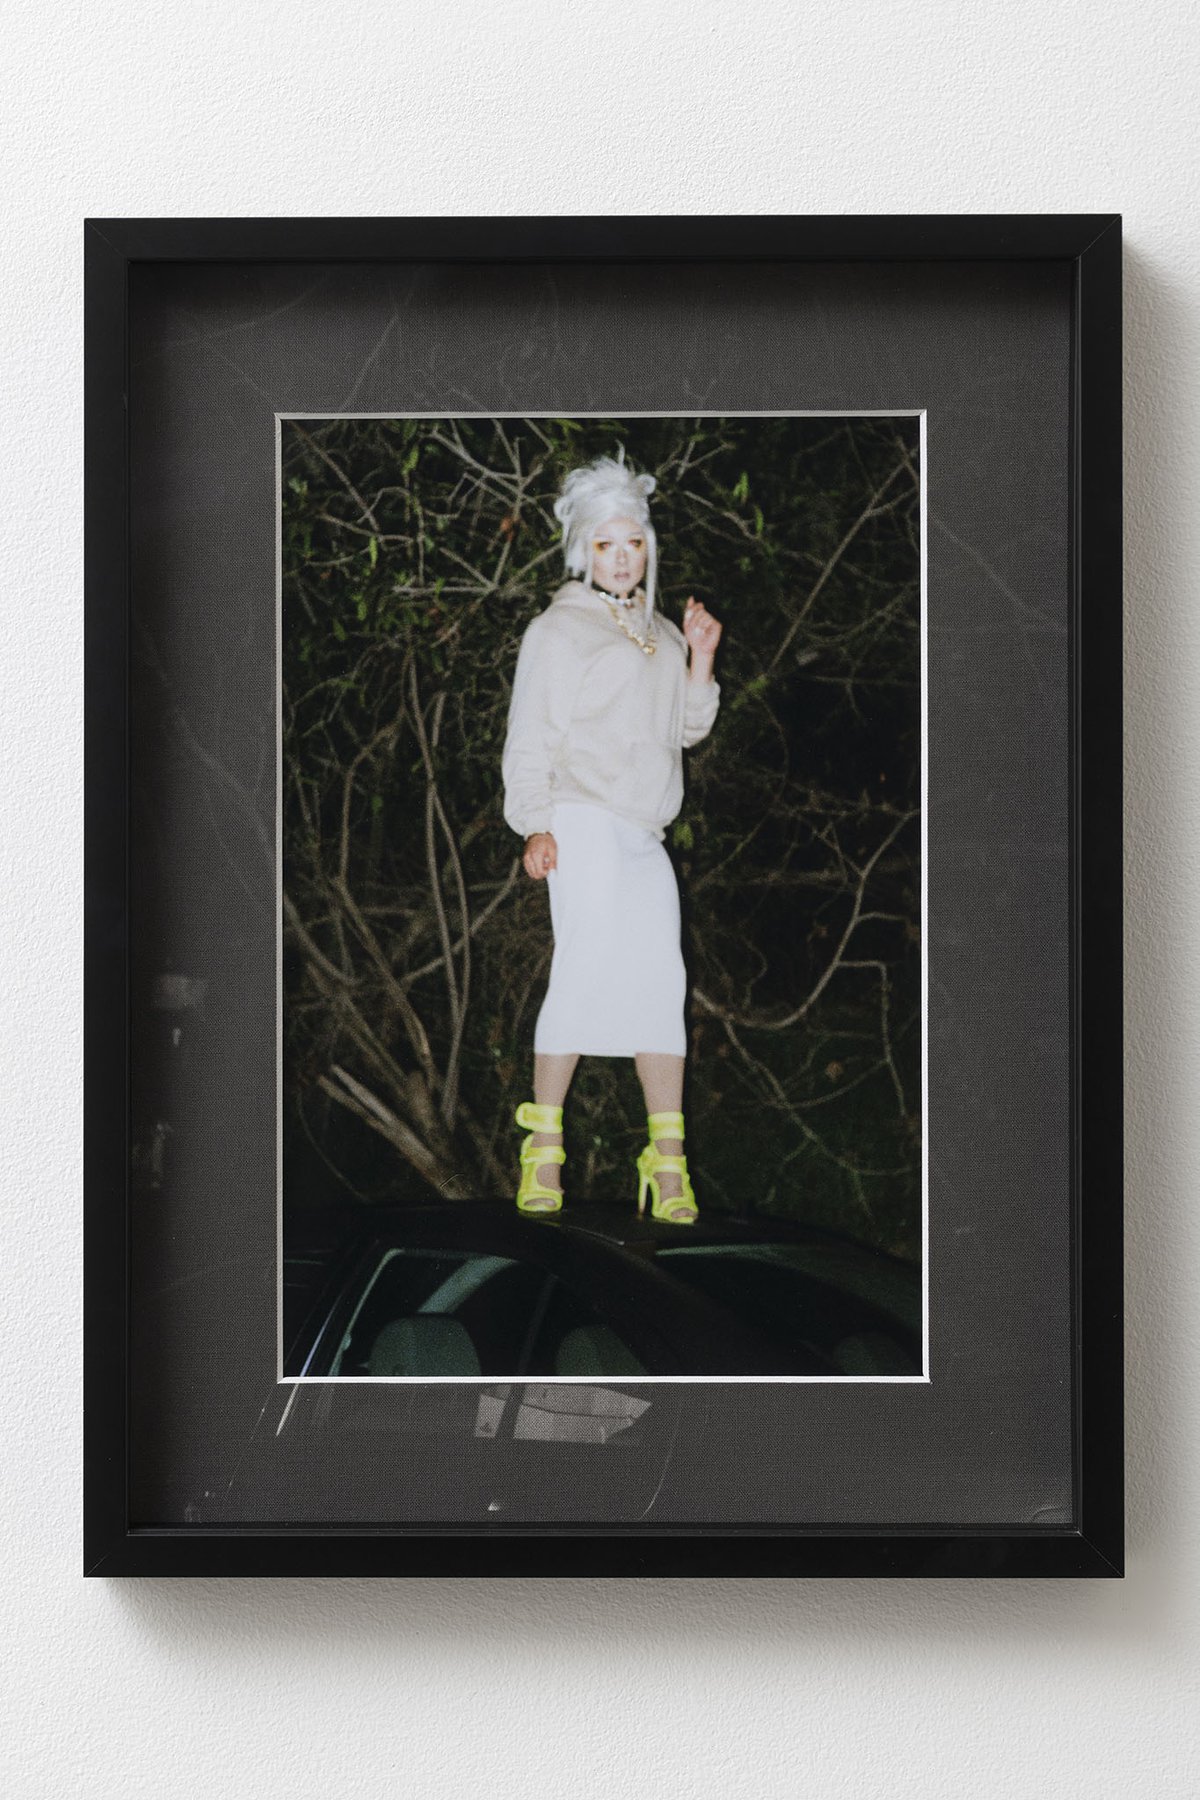 Philipp Timischl(ELYSIAN PARK), 2019C-print, framed with custom passepartout43 x 32 cm